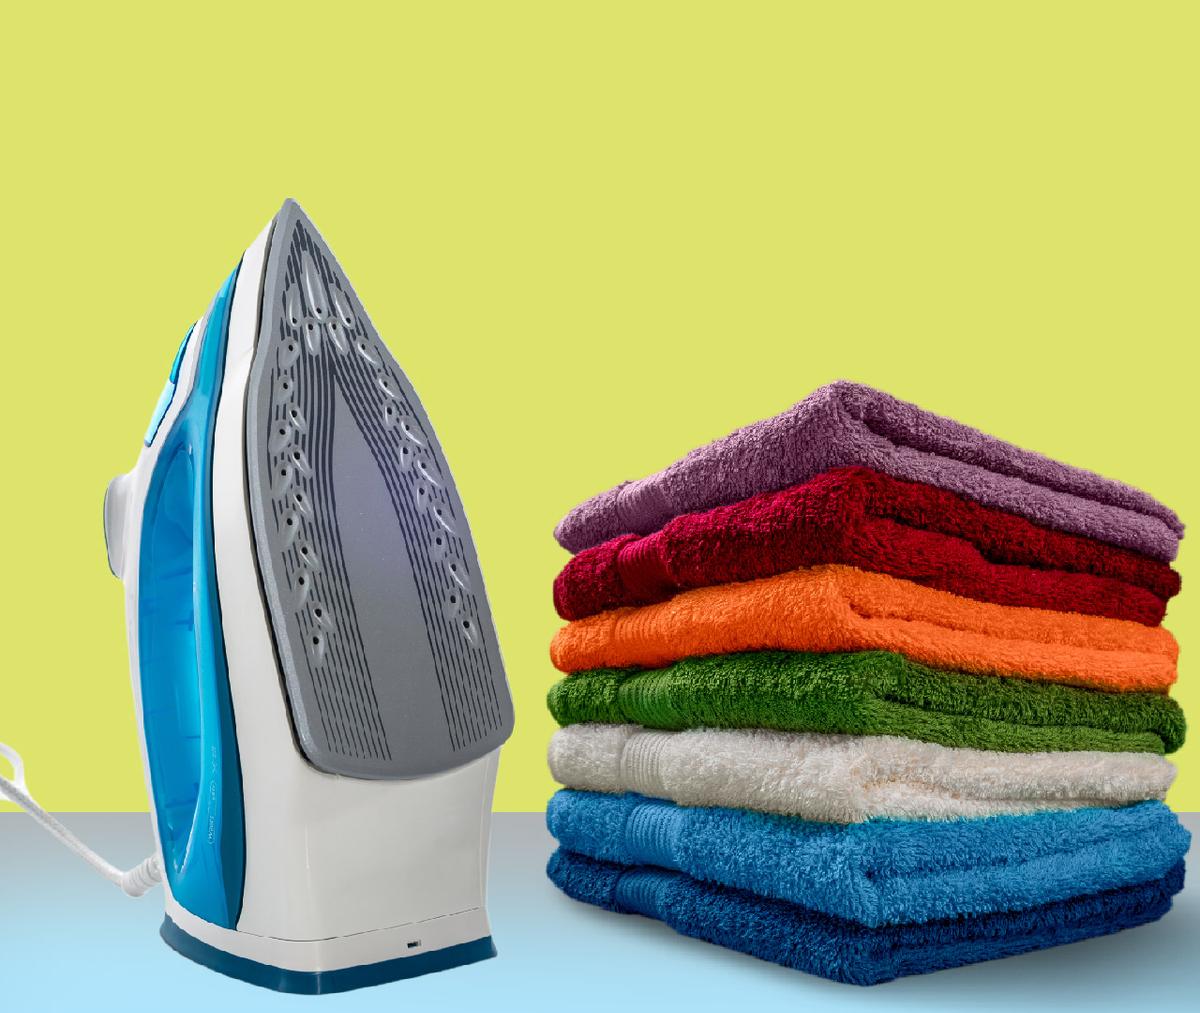 Towel ironing